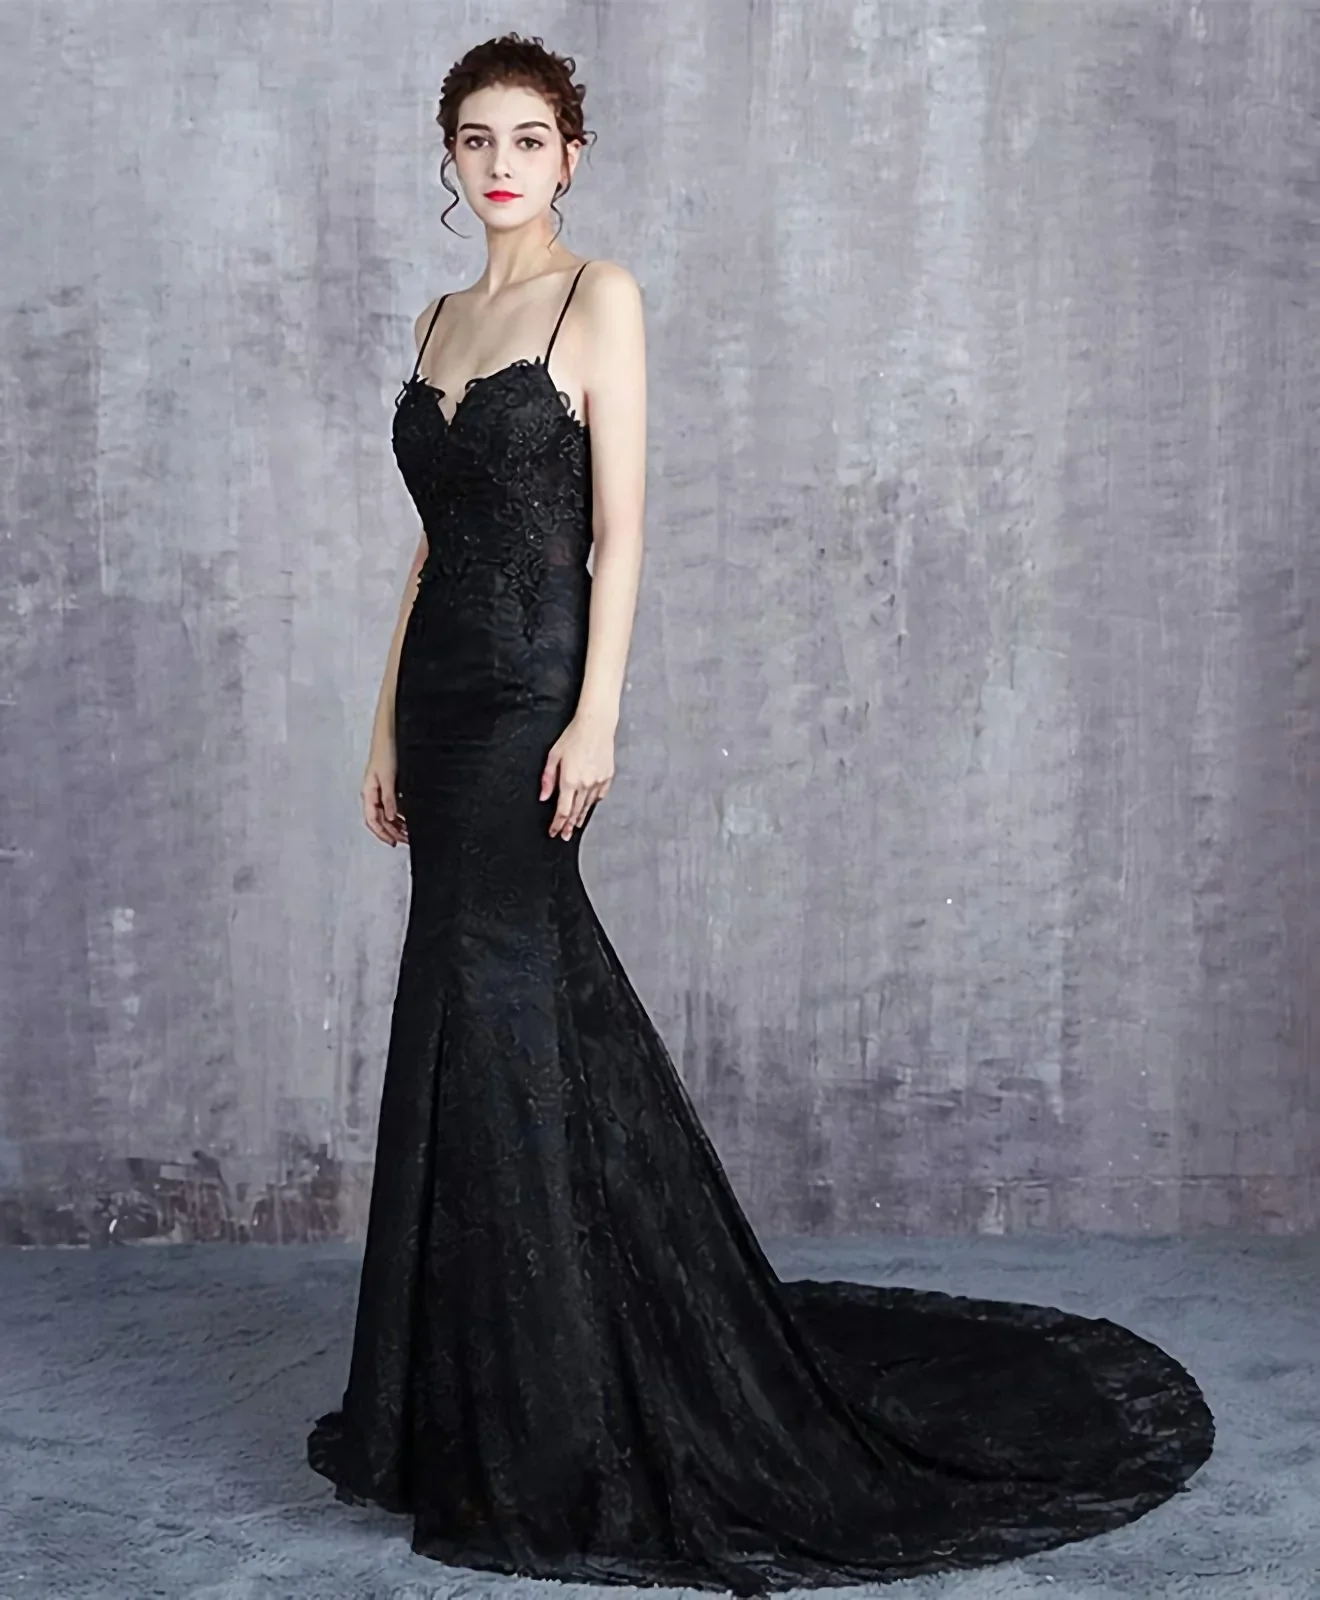 Spaghetti Straps Mermaid Black Embroidered Long Prom Dress V Neck Evening Dress SP35